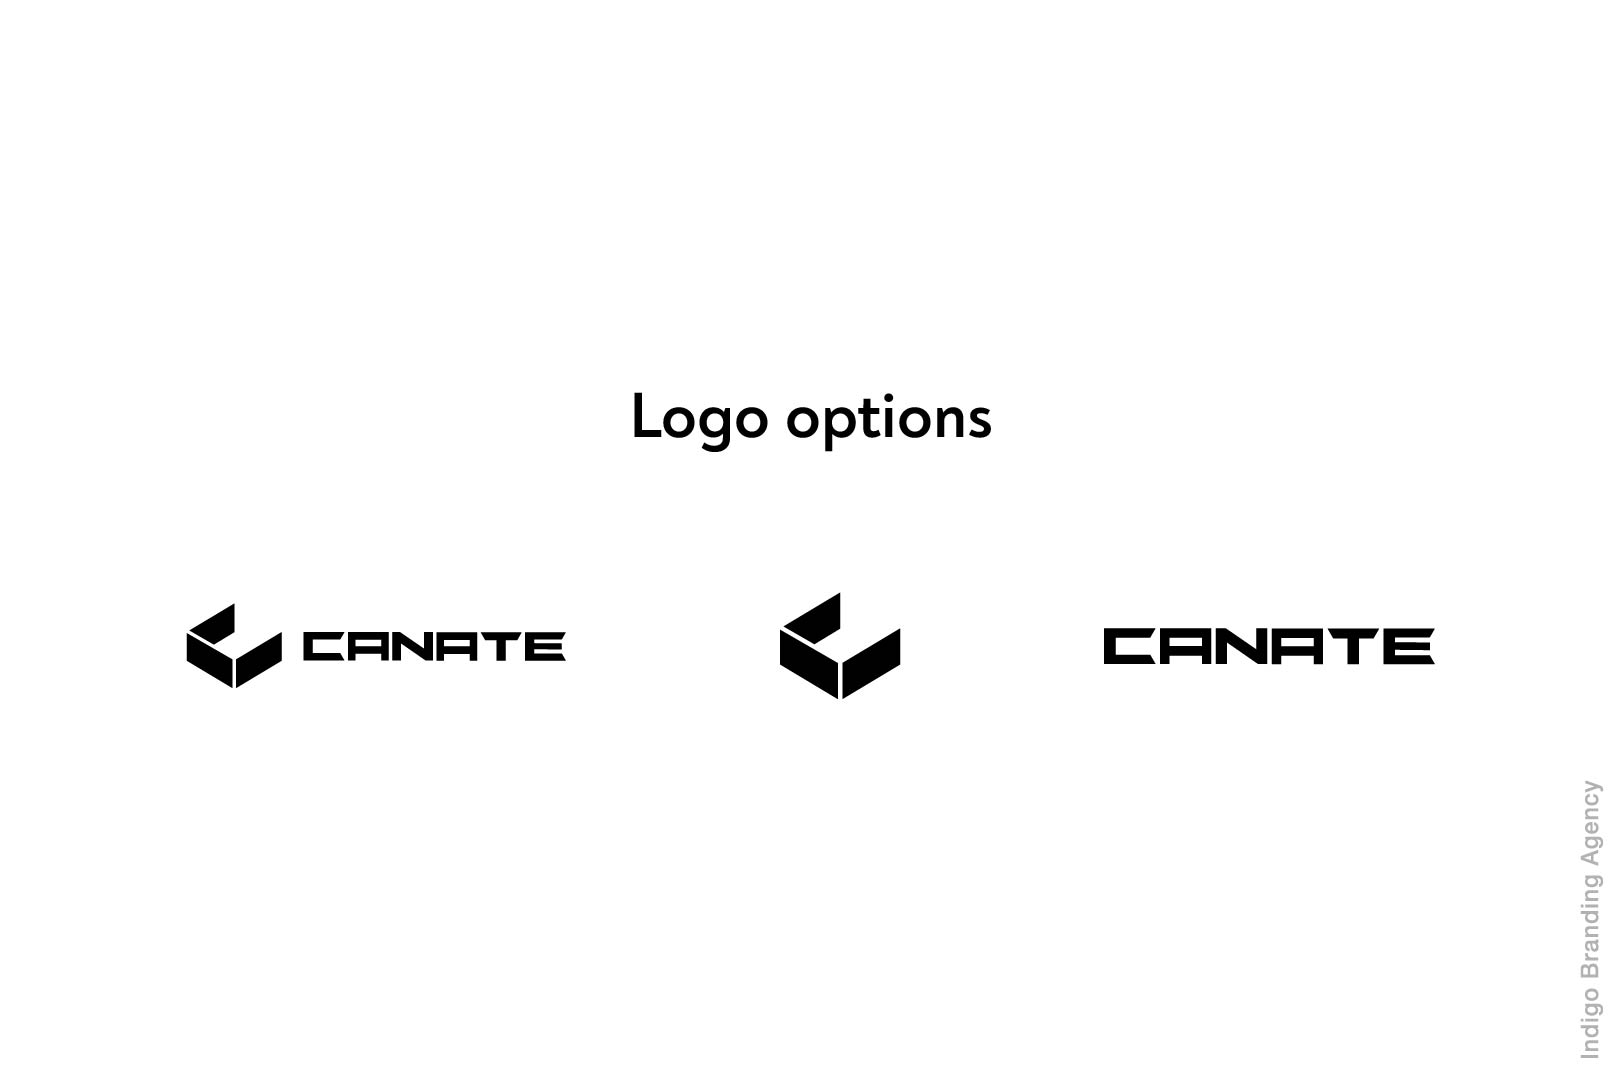 Canate branding and logo design done by indigo branding in Yerevan